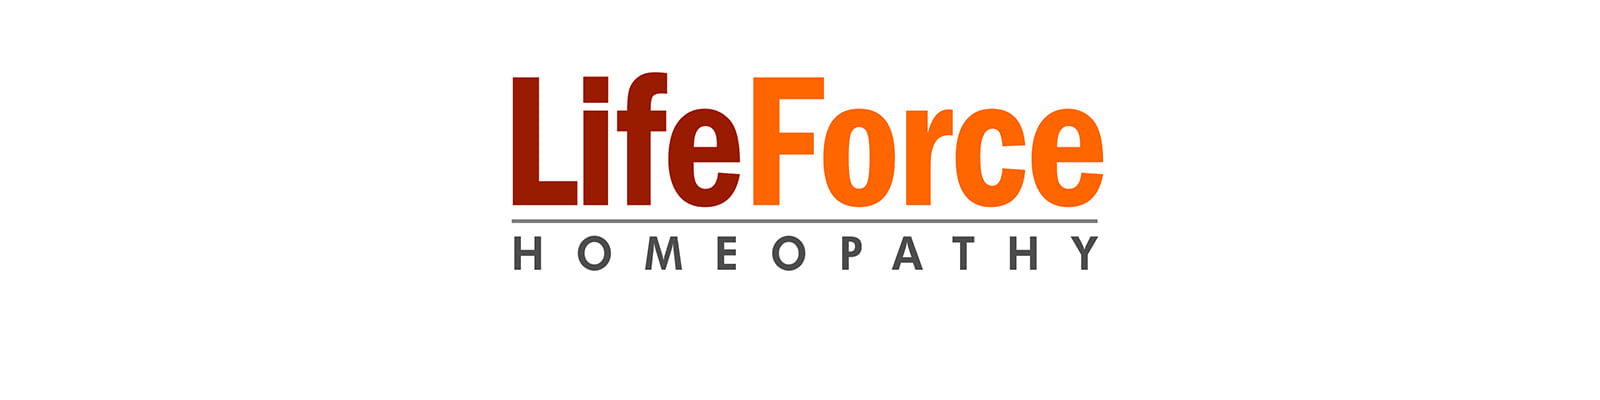 Life Force Homeopathy - Chembur